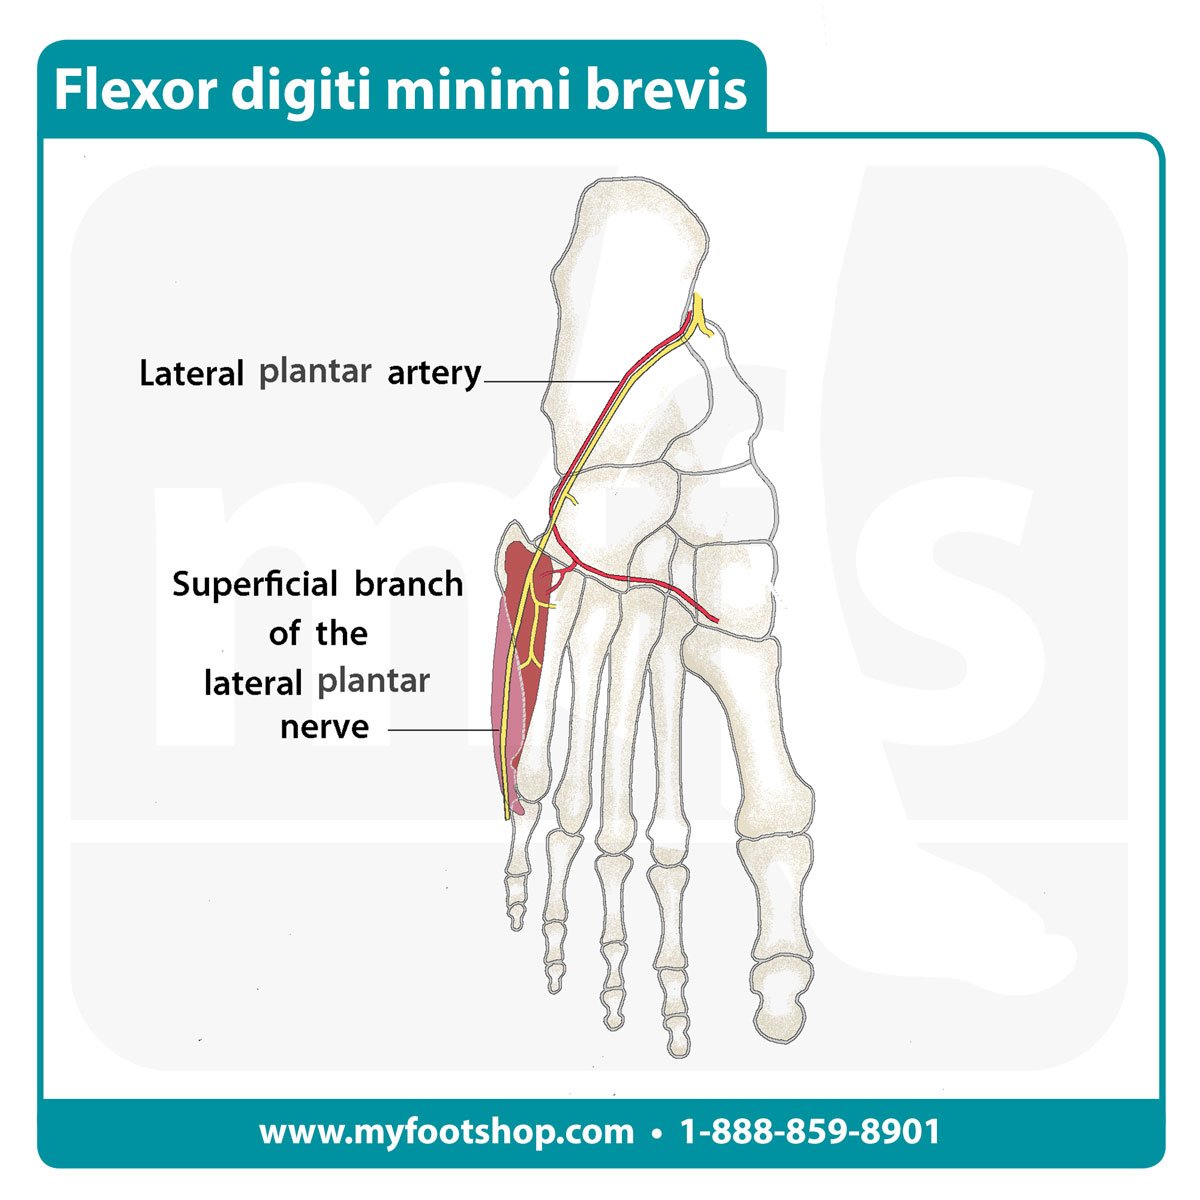 Image of the flexor digiti minimi brevis muscle